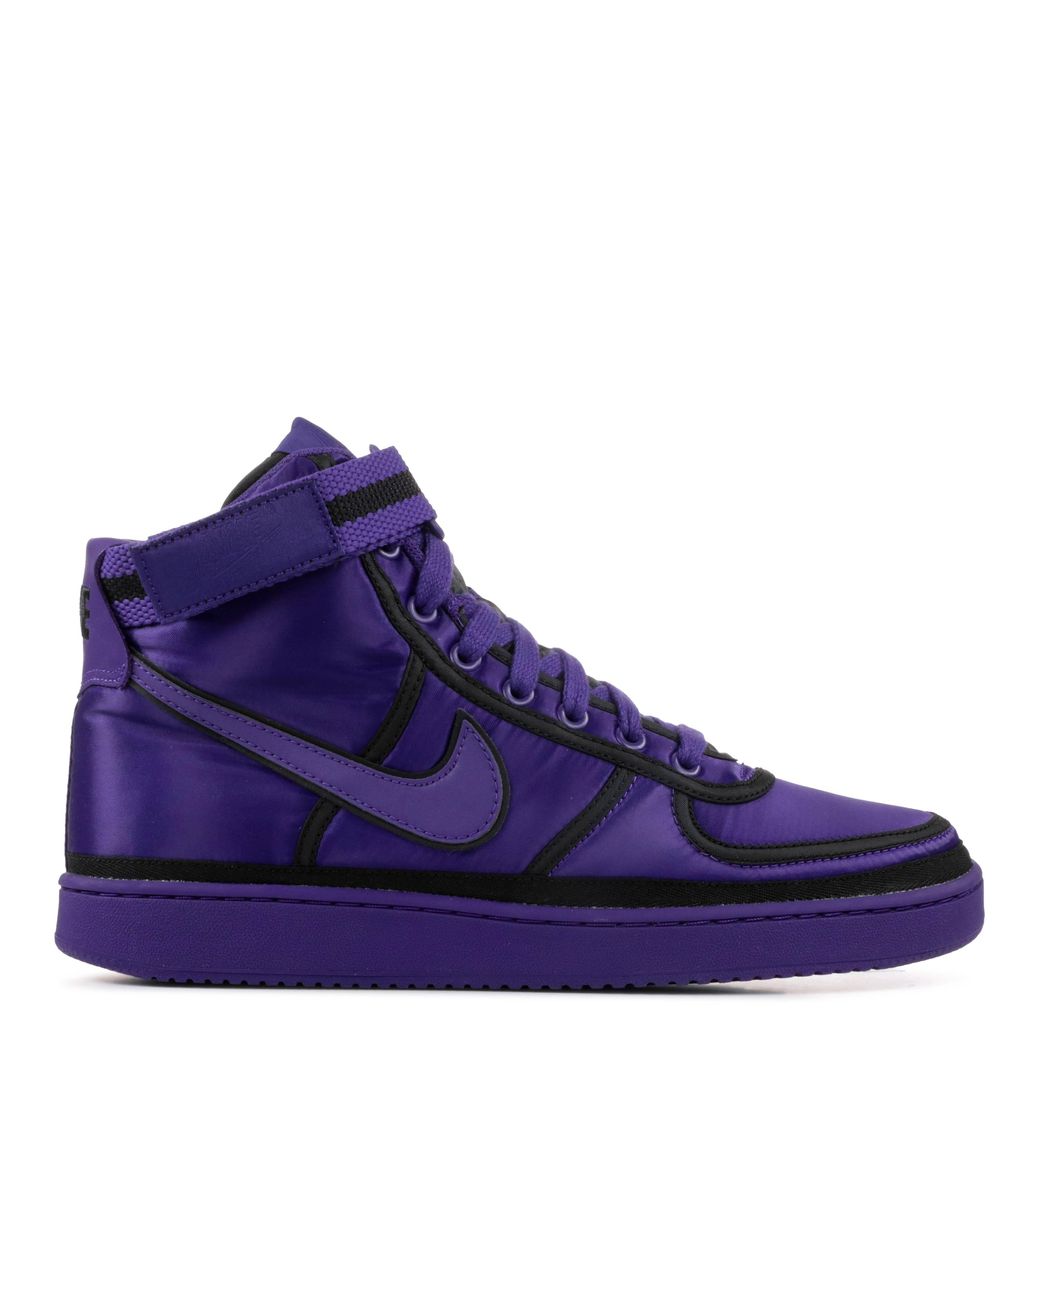 Nike фиолетовые кроссовки. Nike Vandal High Supreme Purple. Найк Флекс фиолетовые. Кроссовки найк сиреневые мужские. Nike Air фиолетовые мужские.